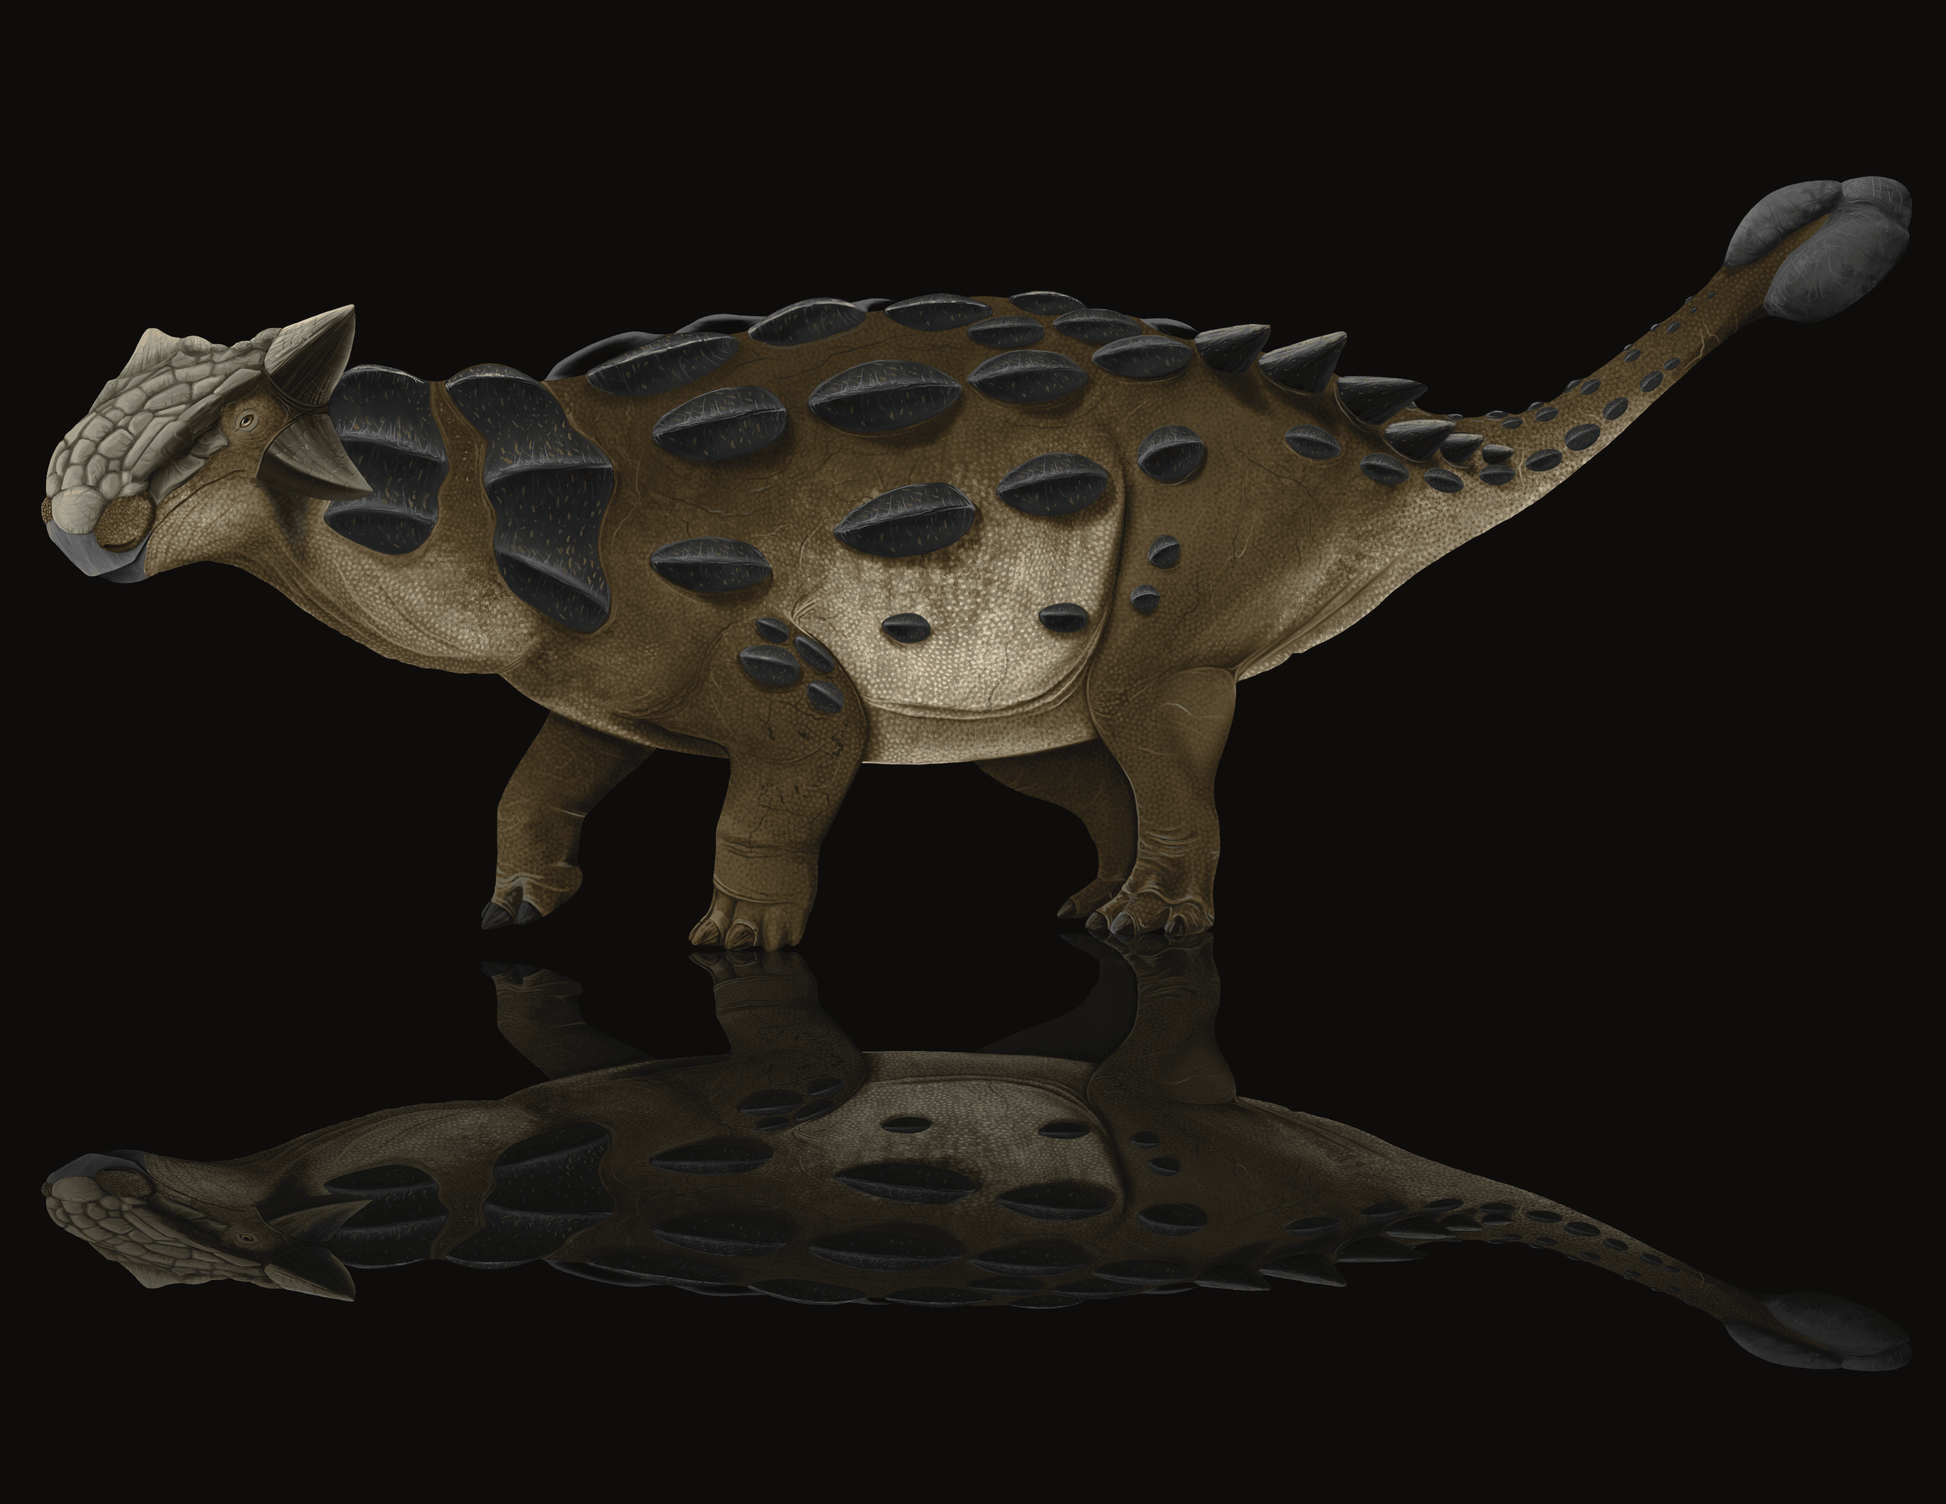 Tarbosaurus getting Leg-Checked by an Ankylosaur